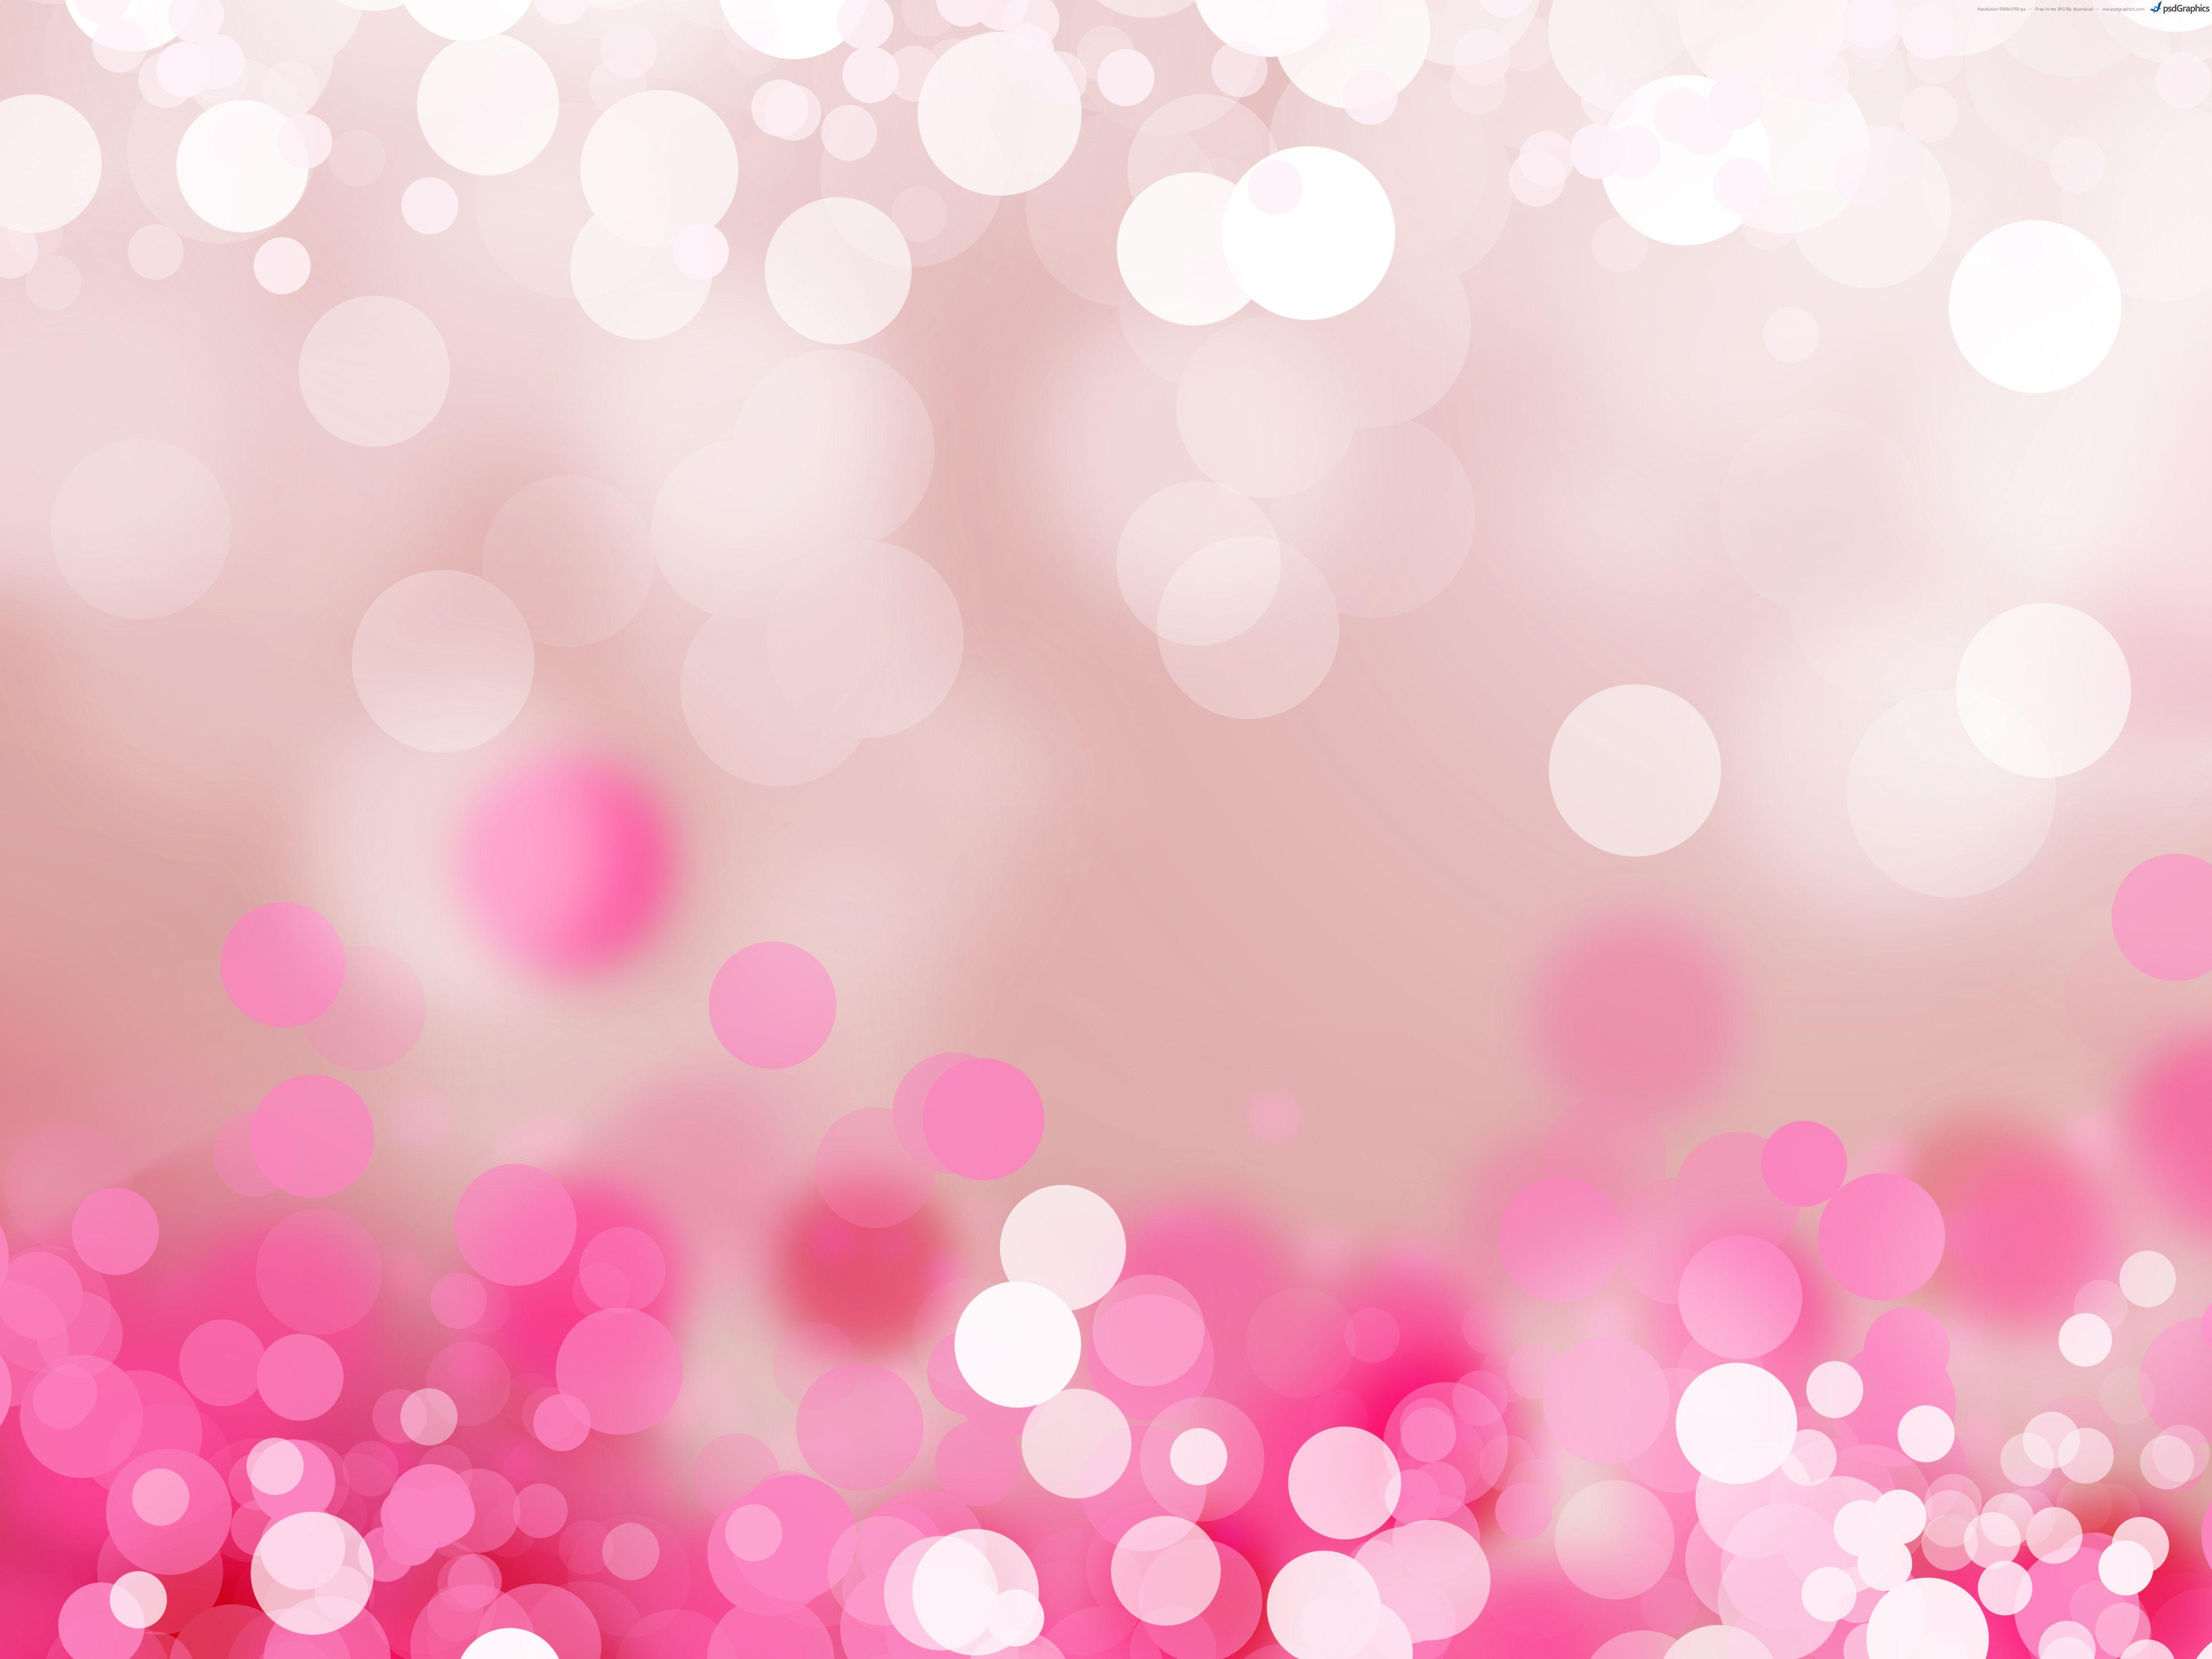 Los mejores 54+ fondos de pantalla de color rosa en HipWallpaper | Papel pintado rosa, rosa lindo